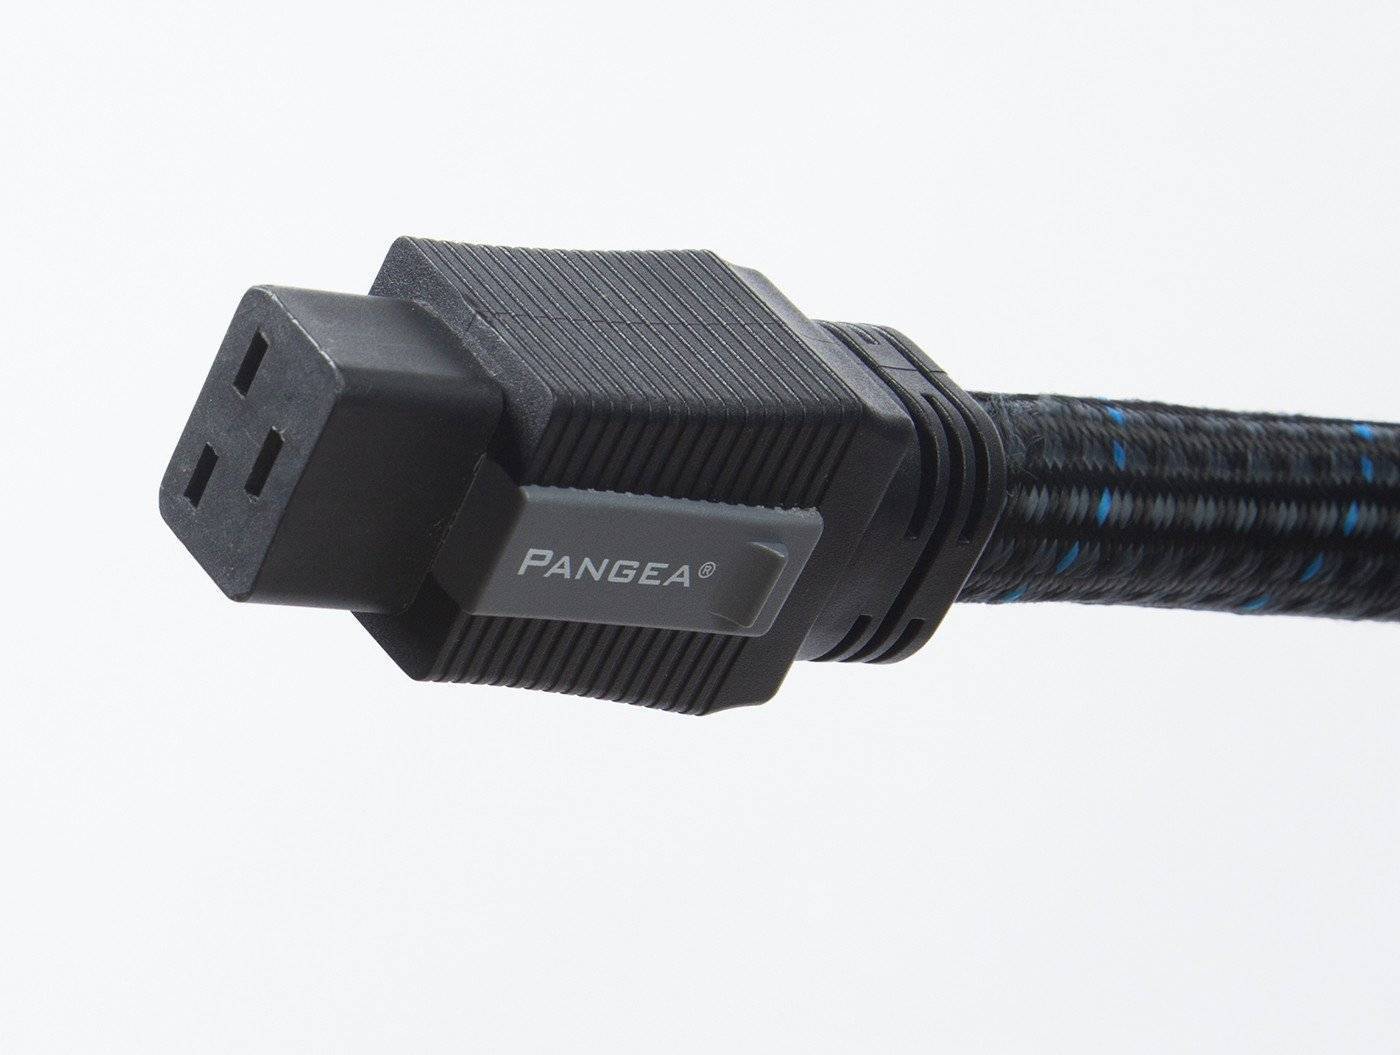 Pangea Audio AC-9SE MKII 20 A Power Cord